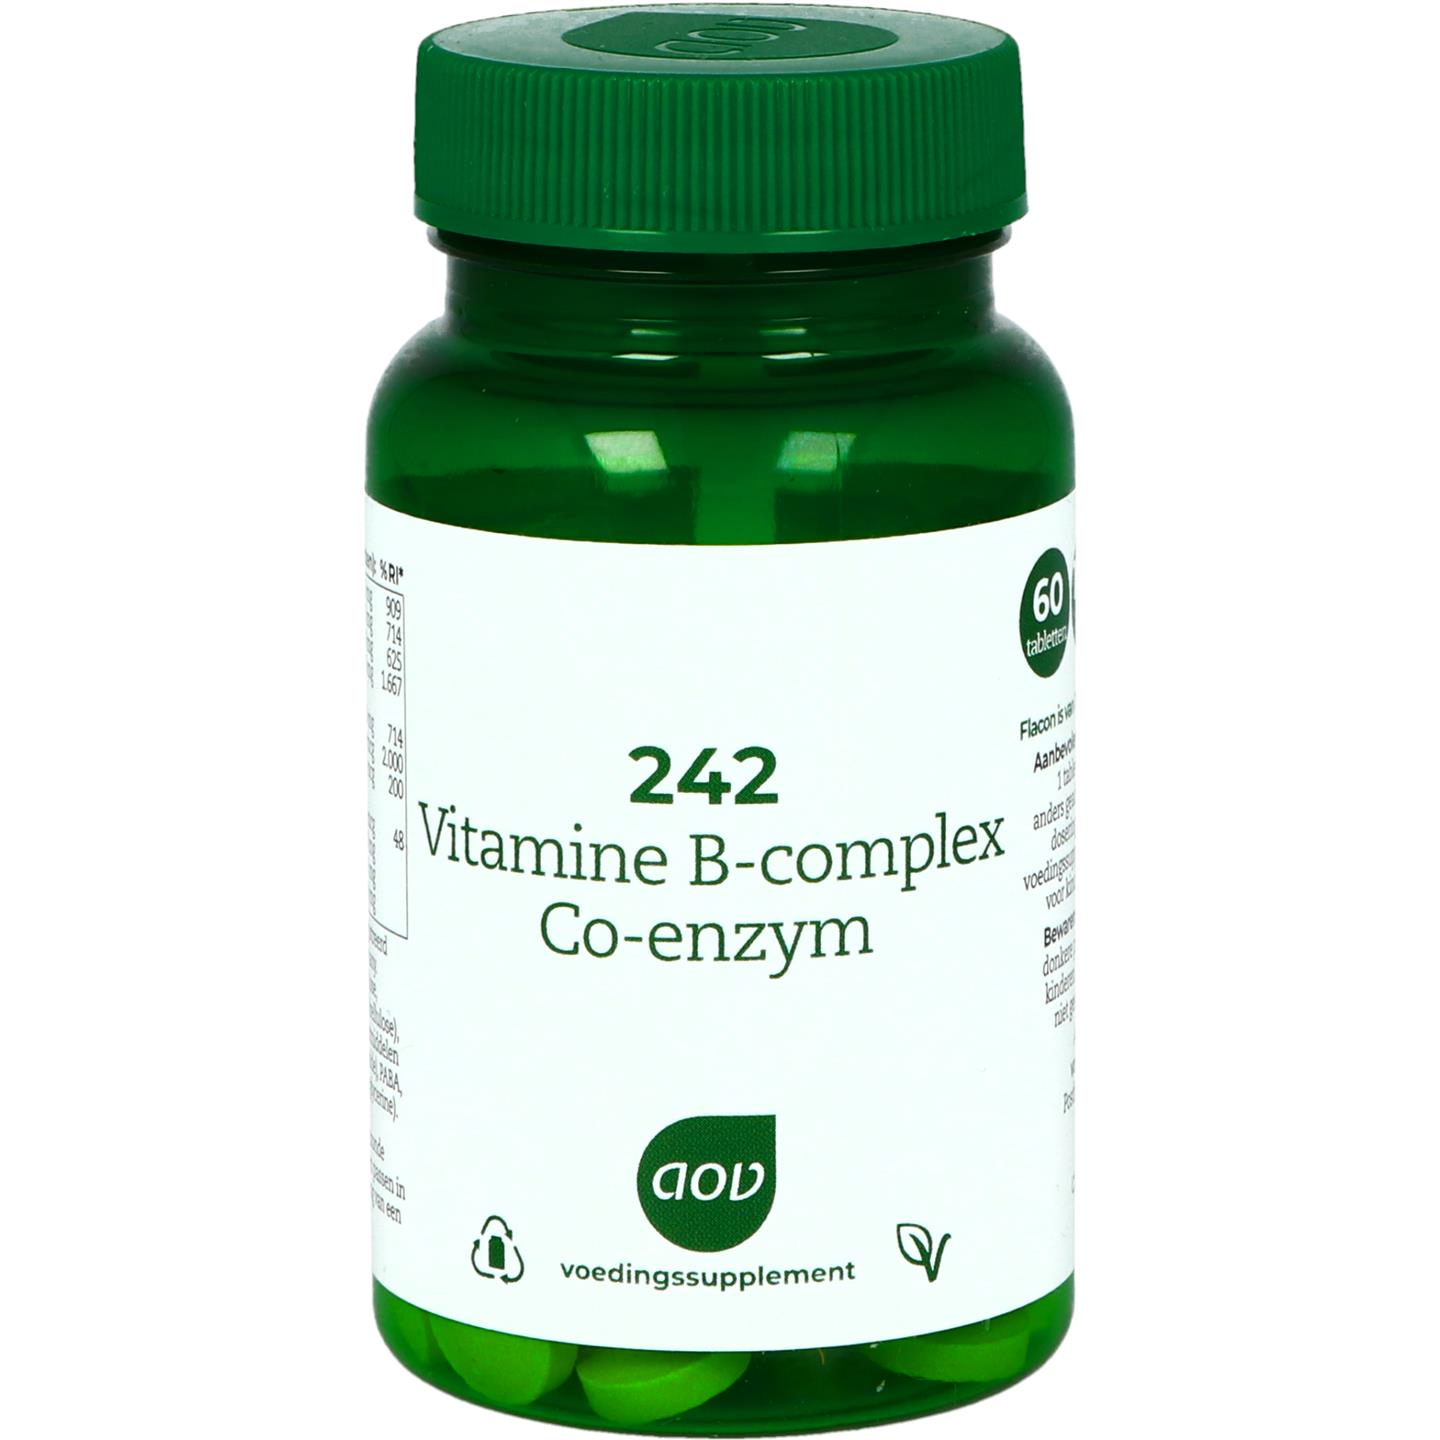 242 Vitamine B complex Co-enzym